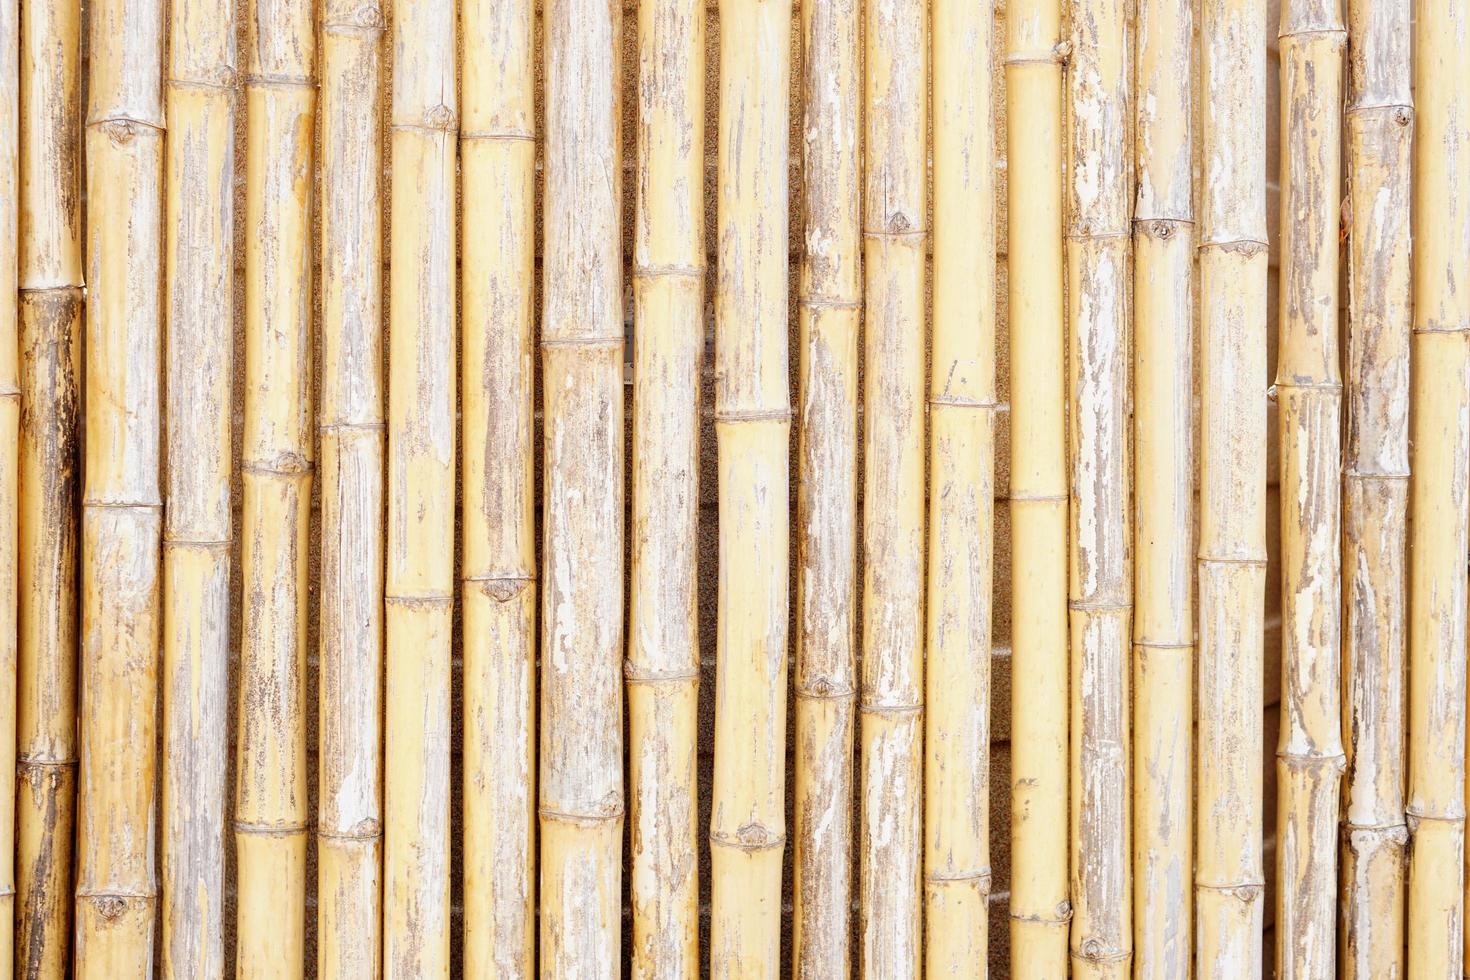 Dry bamboo wood background, Stock image